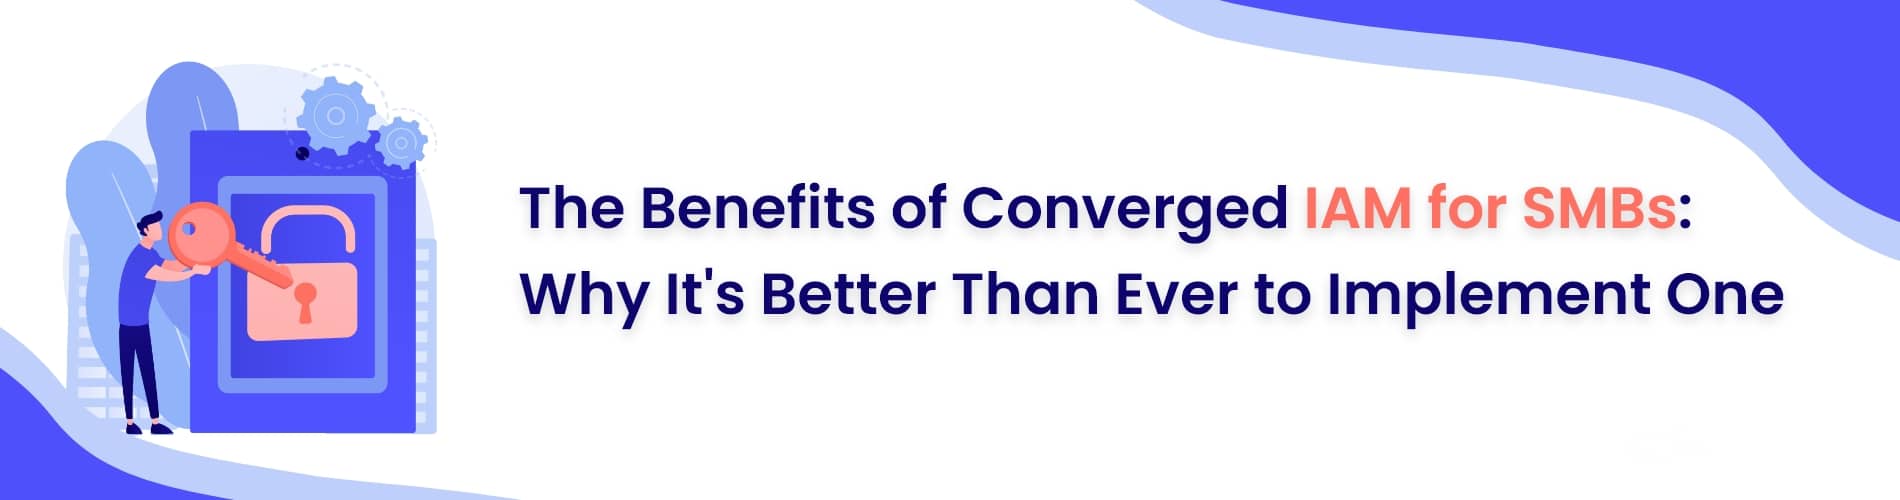 Benefits of Converged IAM